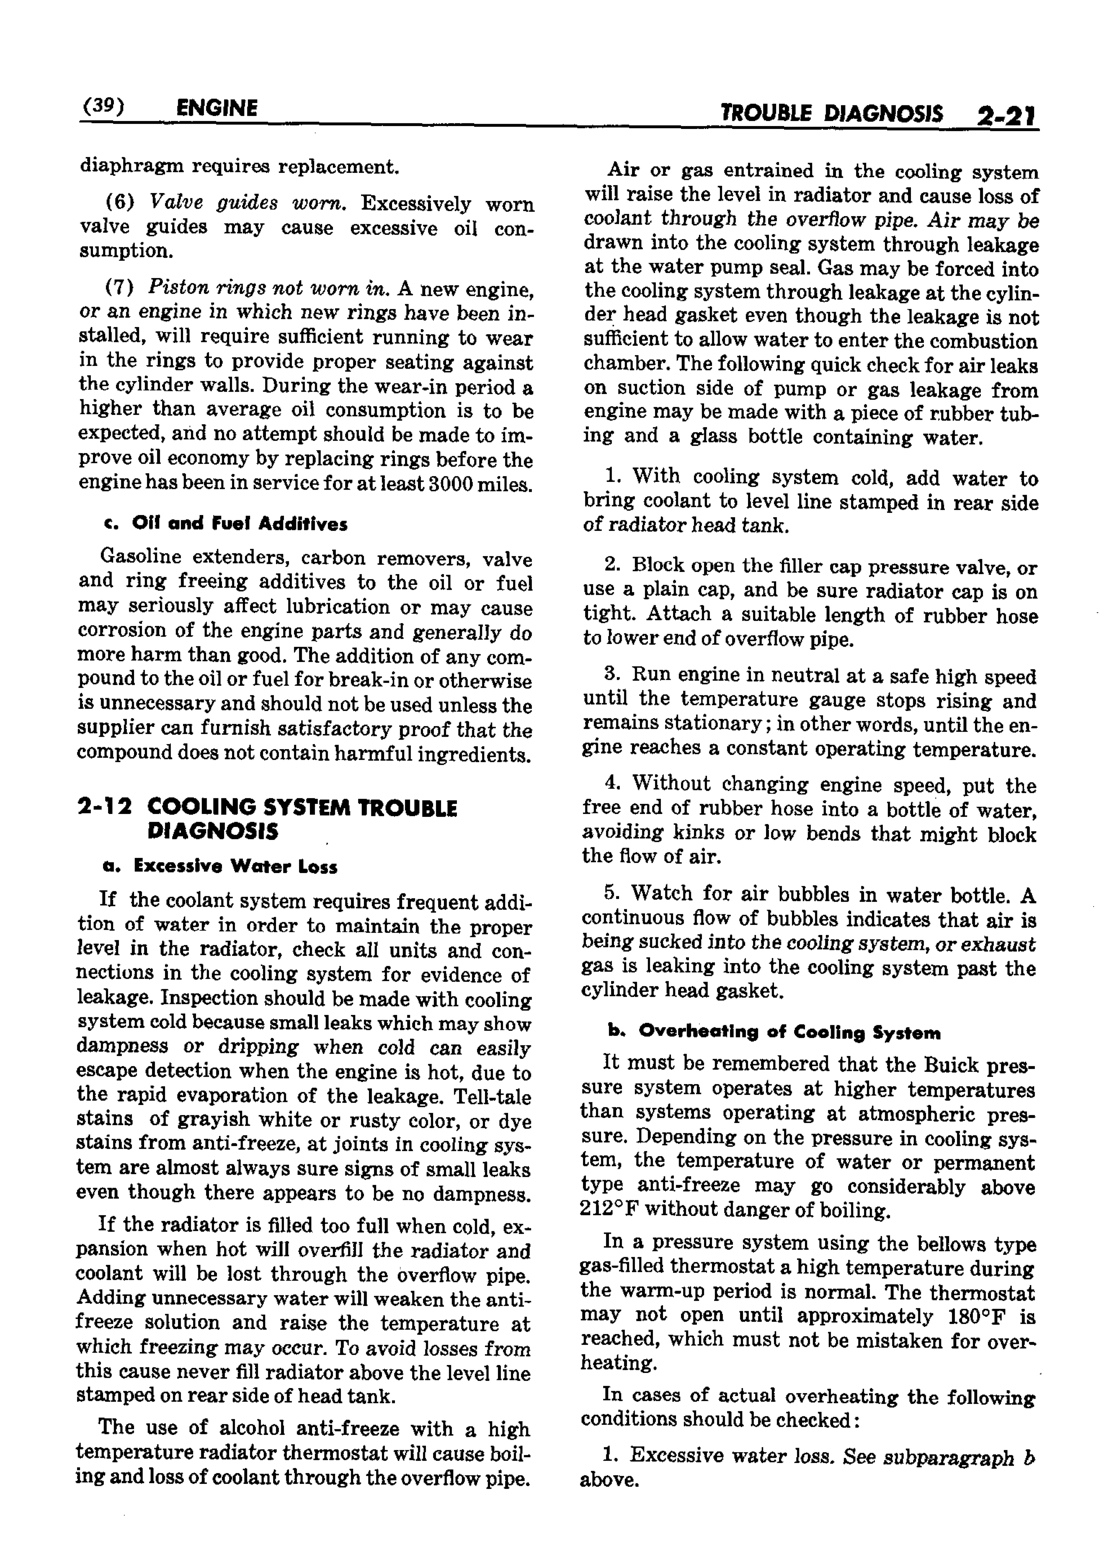 n_03 1952 Buick Shop Manual - Engine-021-021.jpg